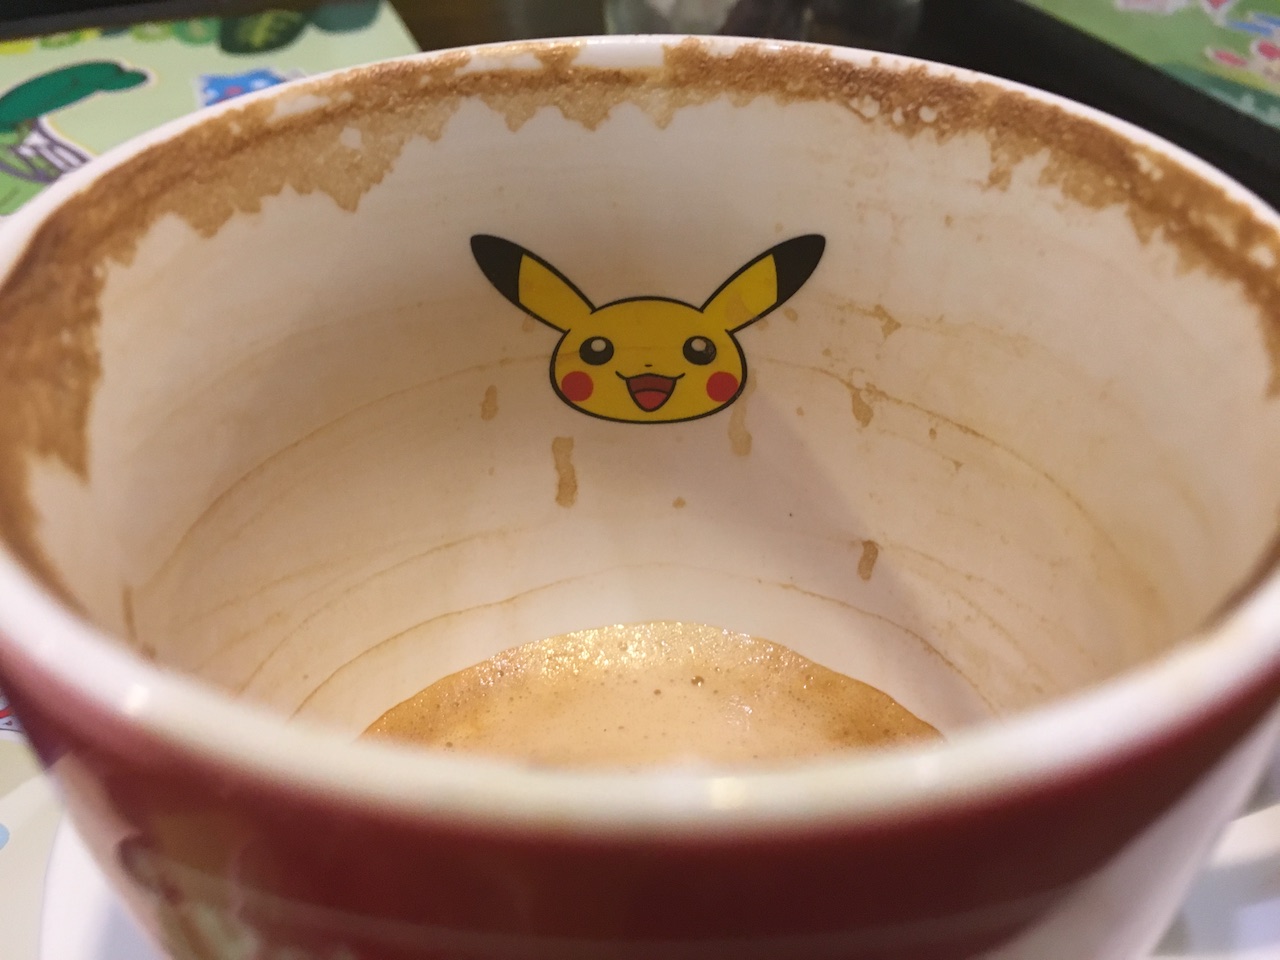 Pikachu Pokémon image inside a red mug